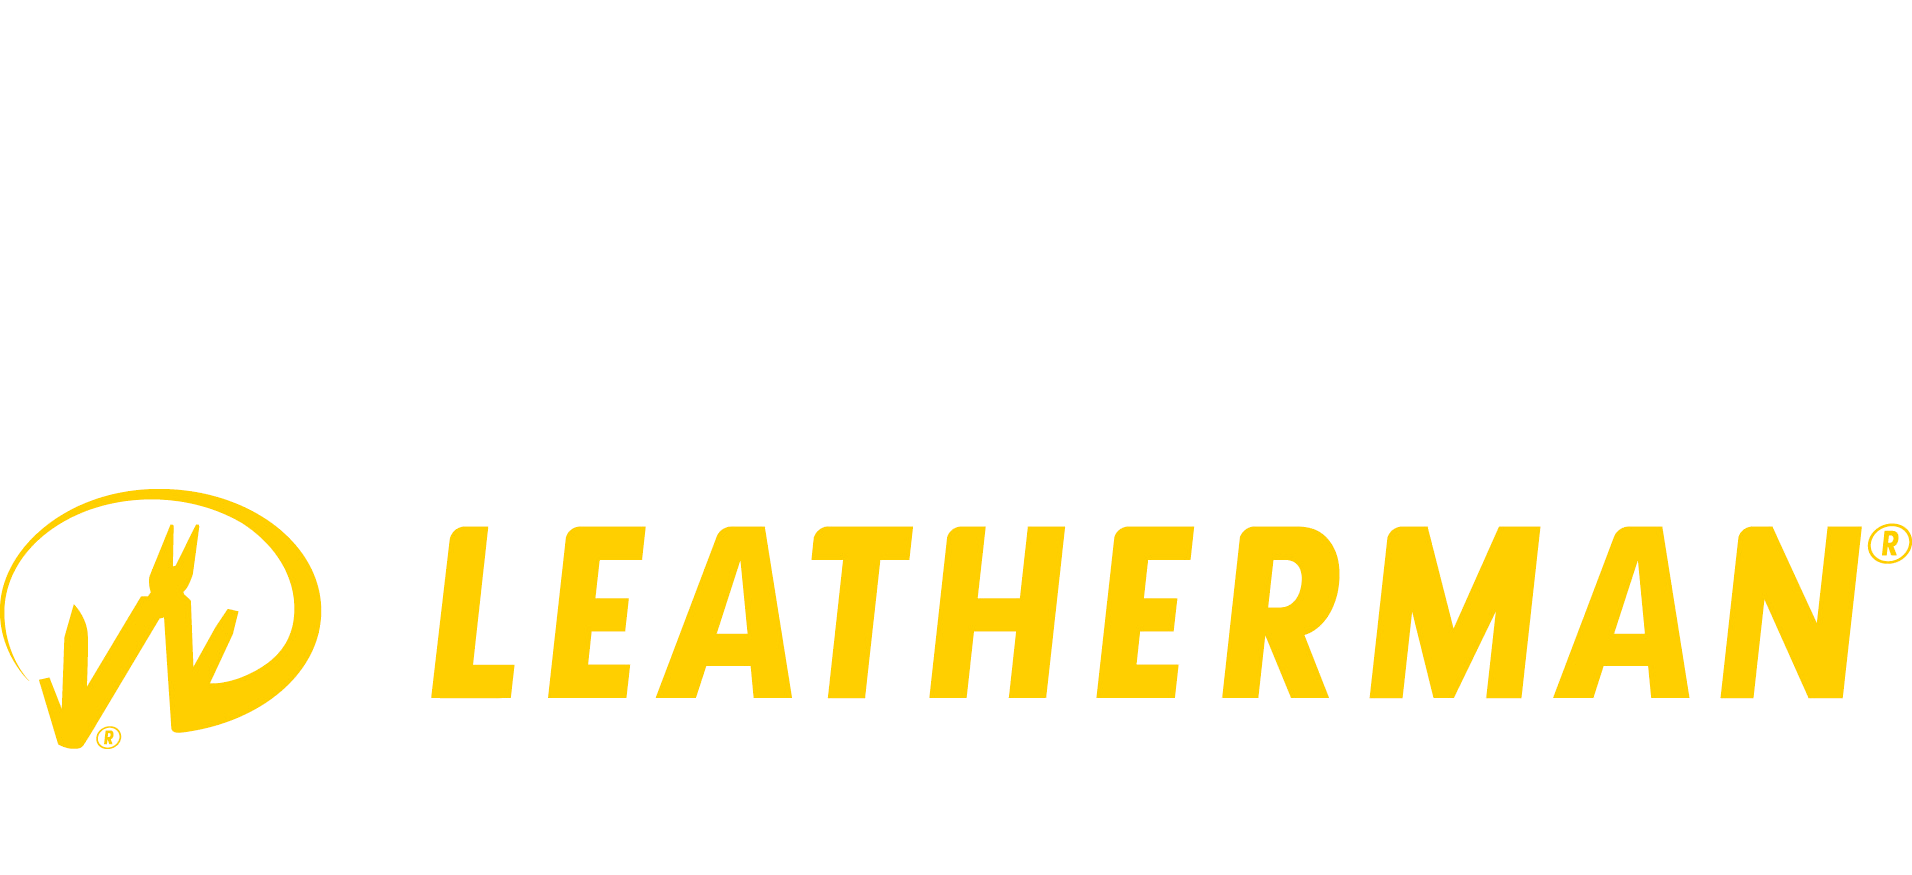 Leatherman Corporate Yellow